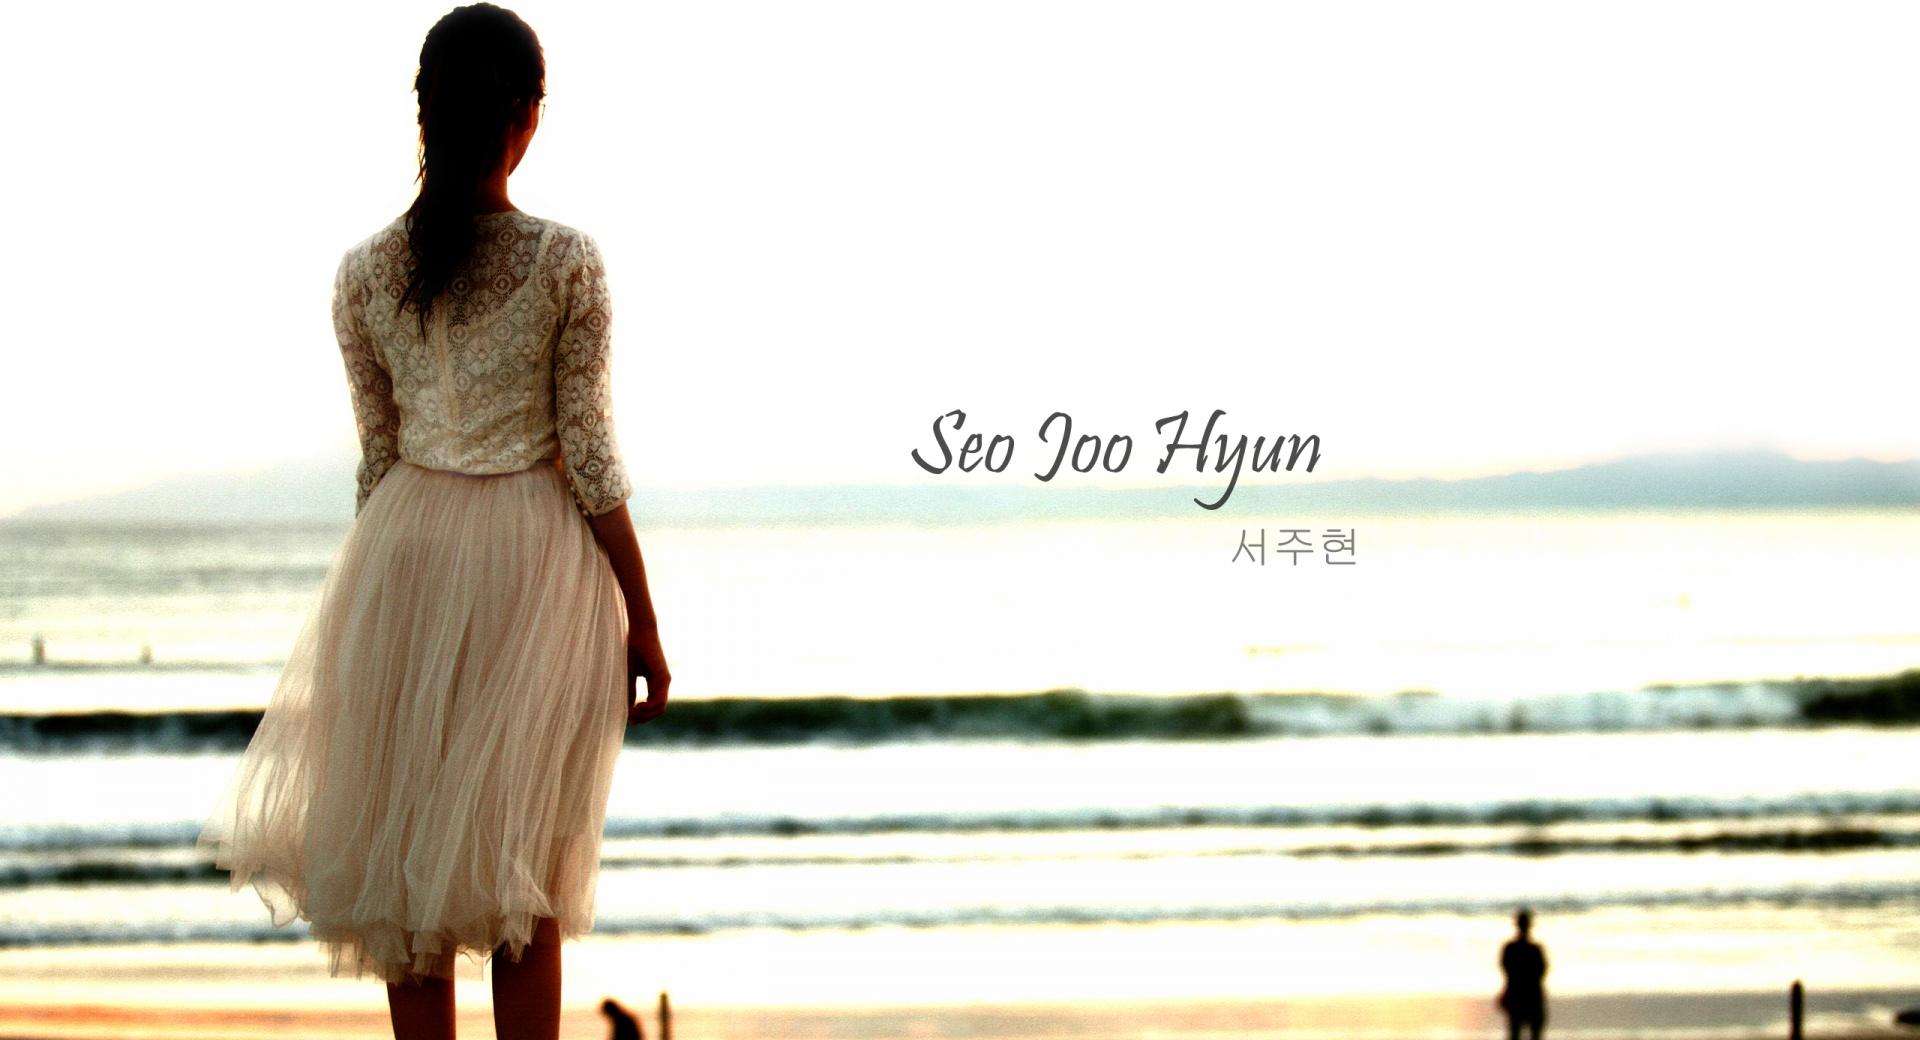 SNSD Seo Joo Hyun at 1152 x 864 size wallpapers HD quality